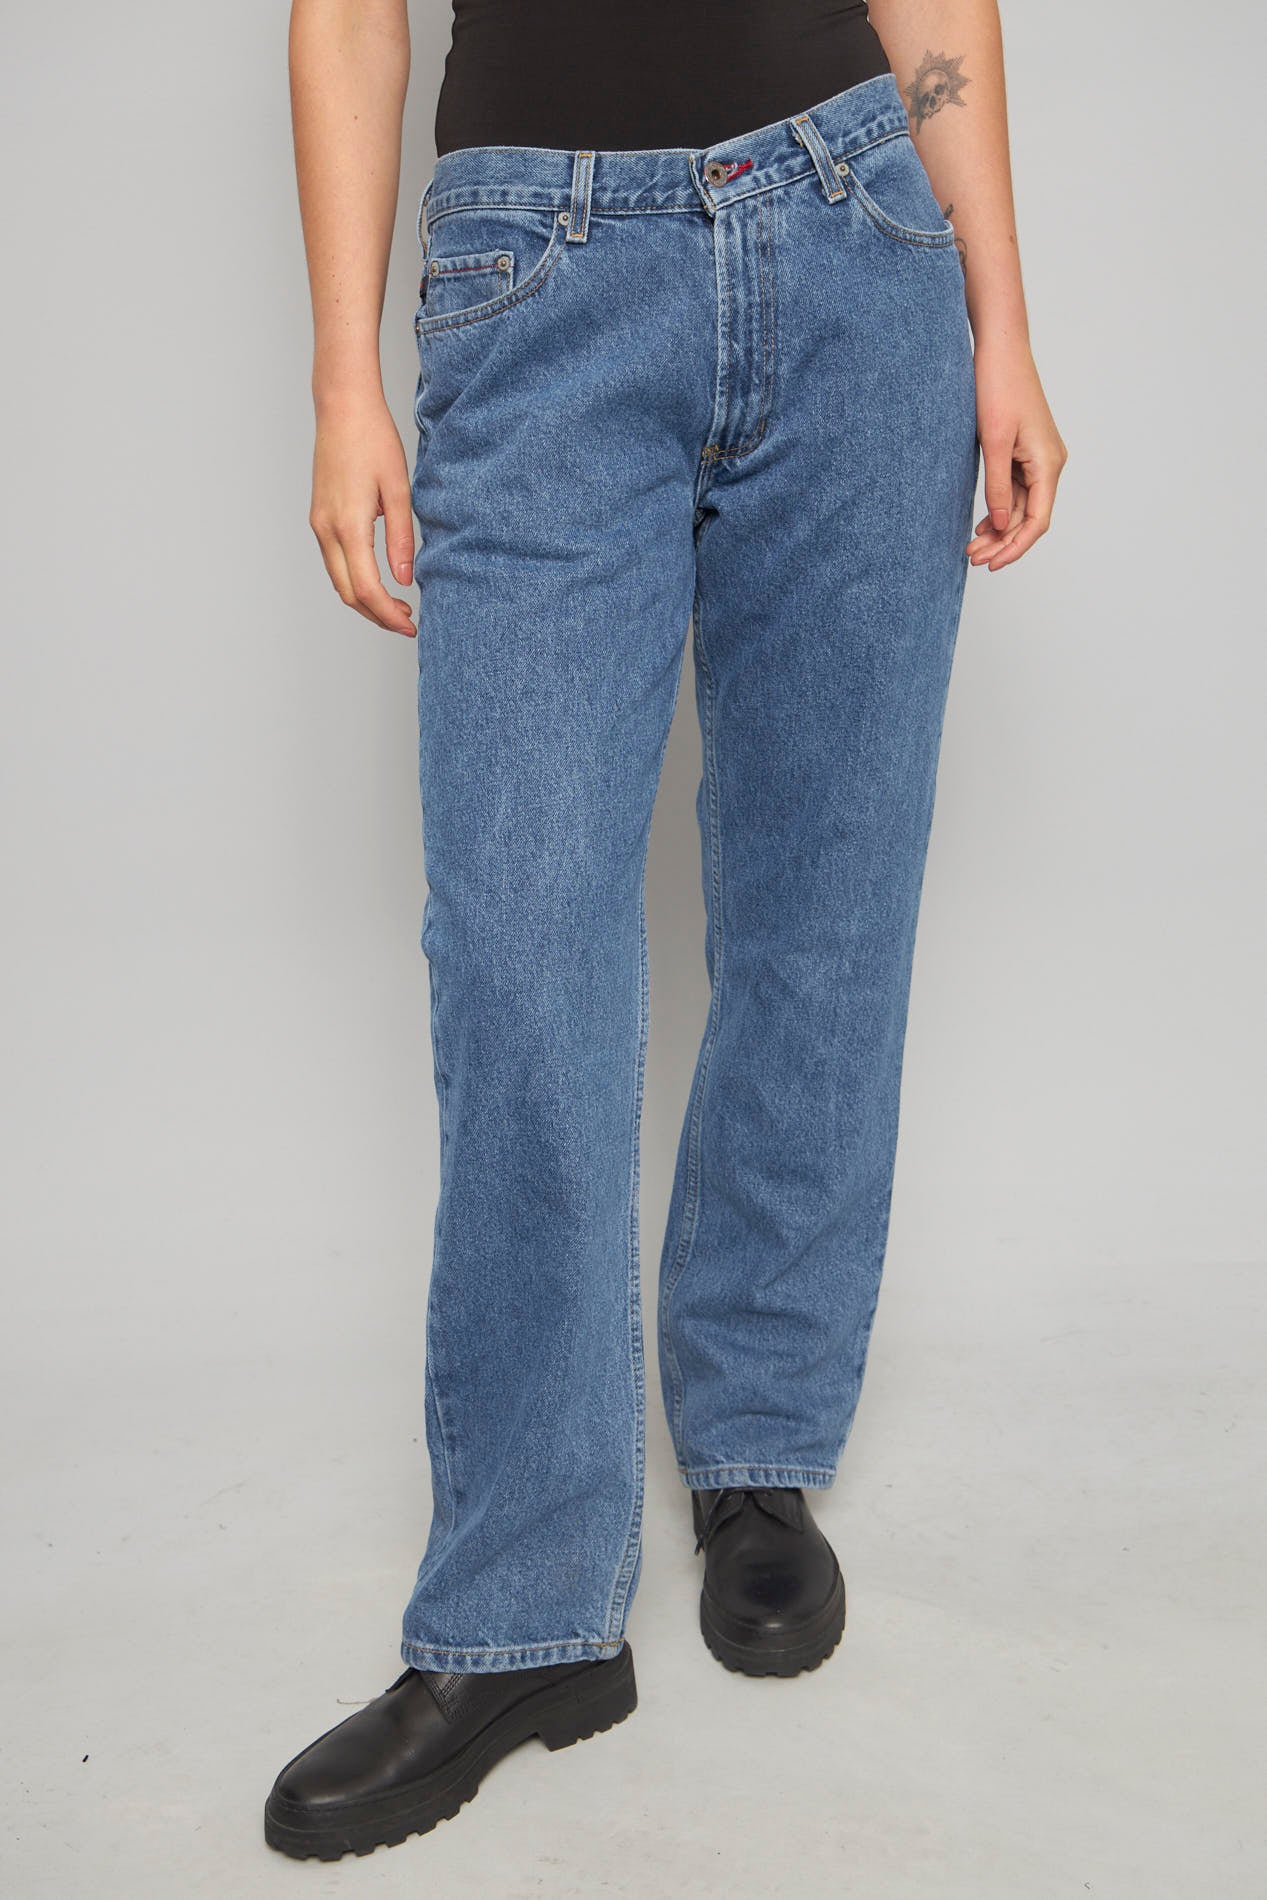 Jeans casual  azul tommy hilfiger talla 40 984